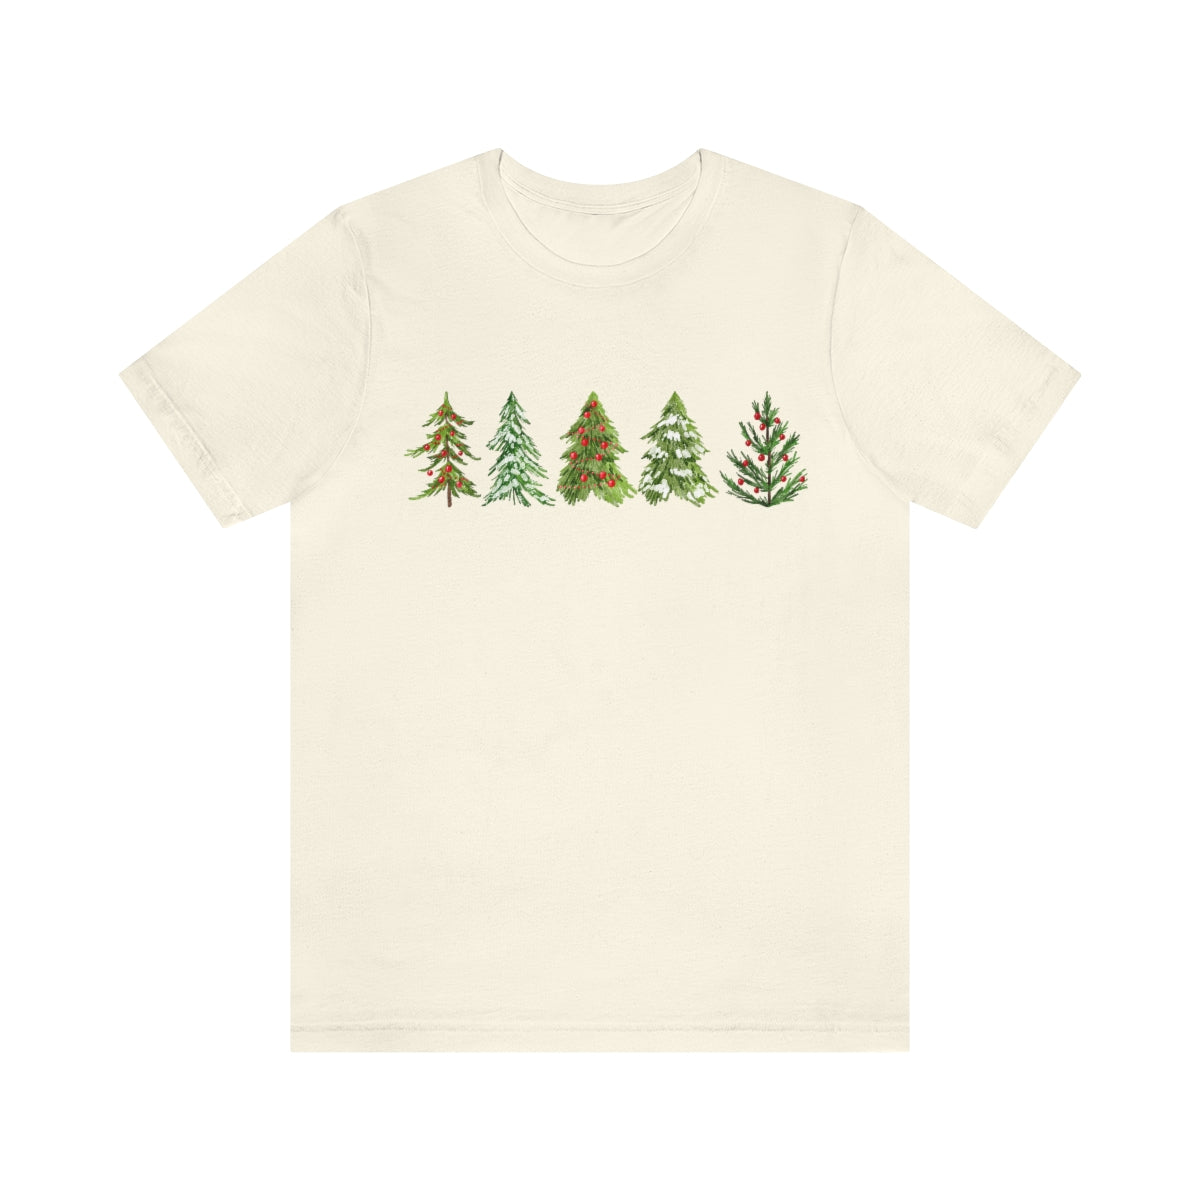 Christmas Trees Shirt, Women's Cut Christmas Tee,